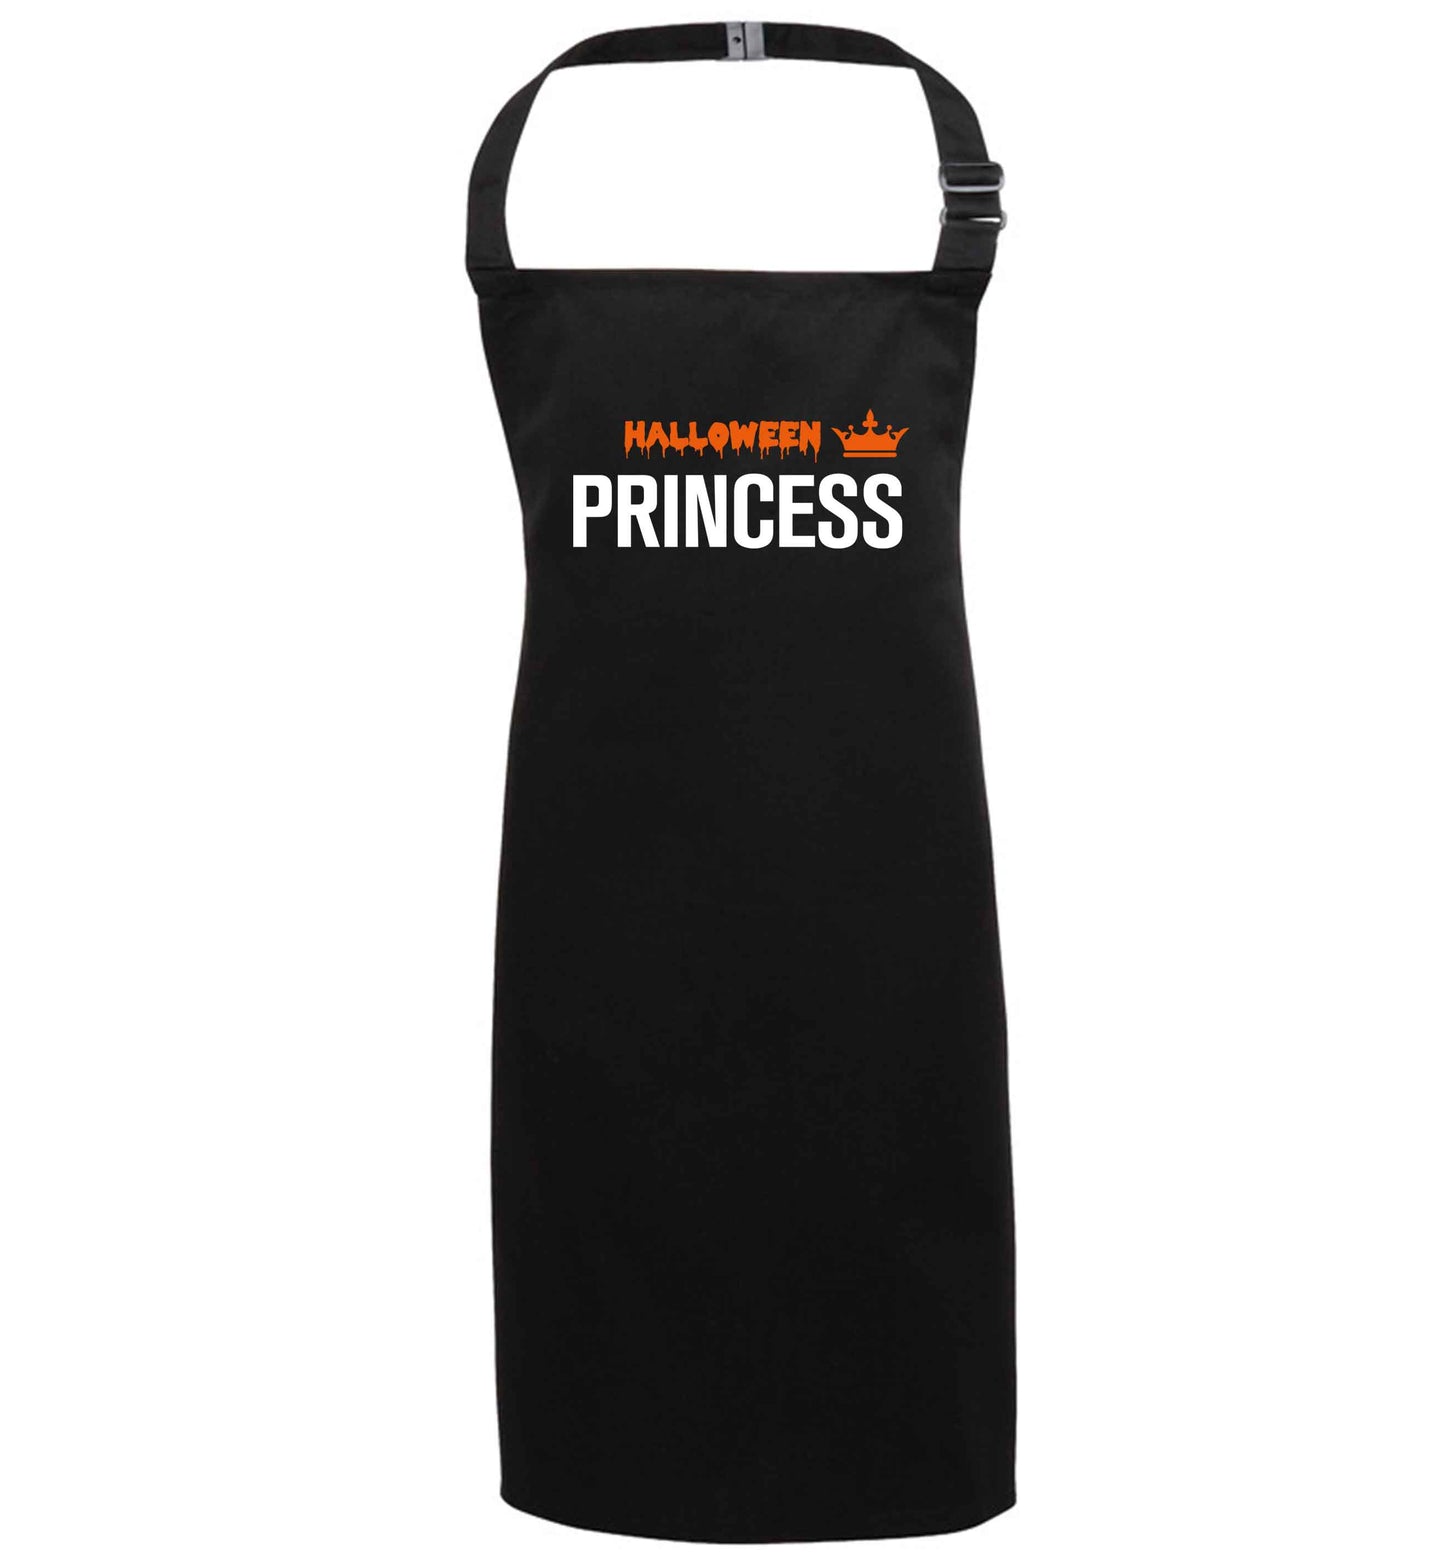 Halloween princess black apron 7-10 years